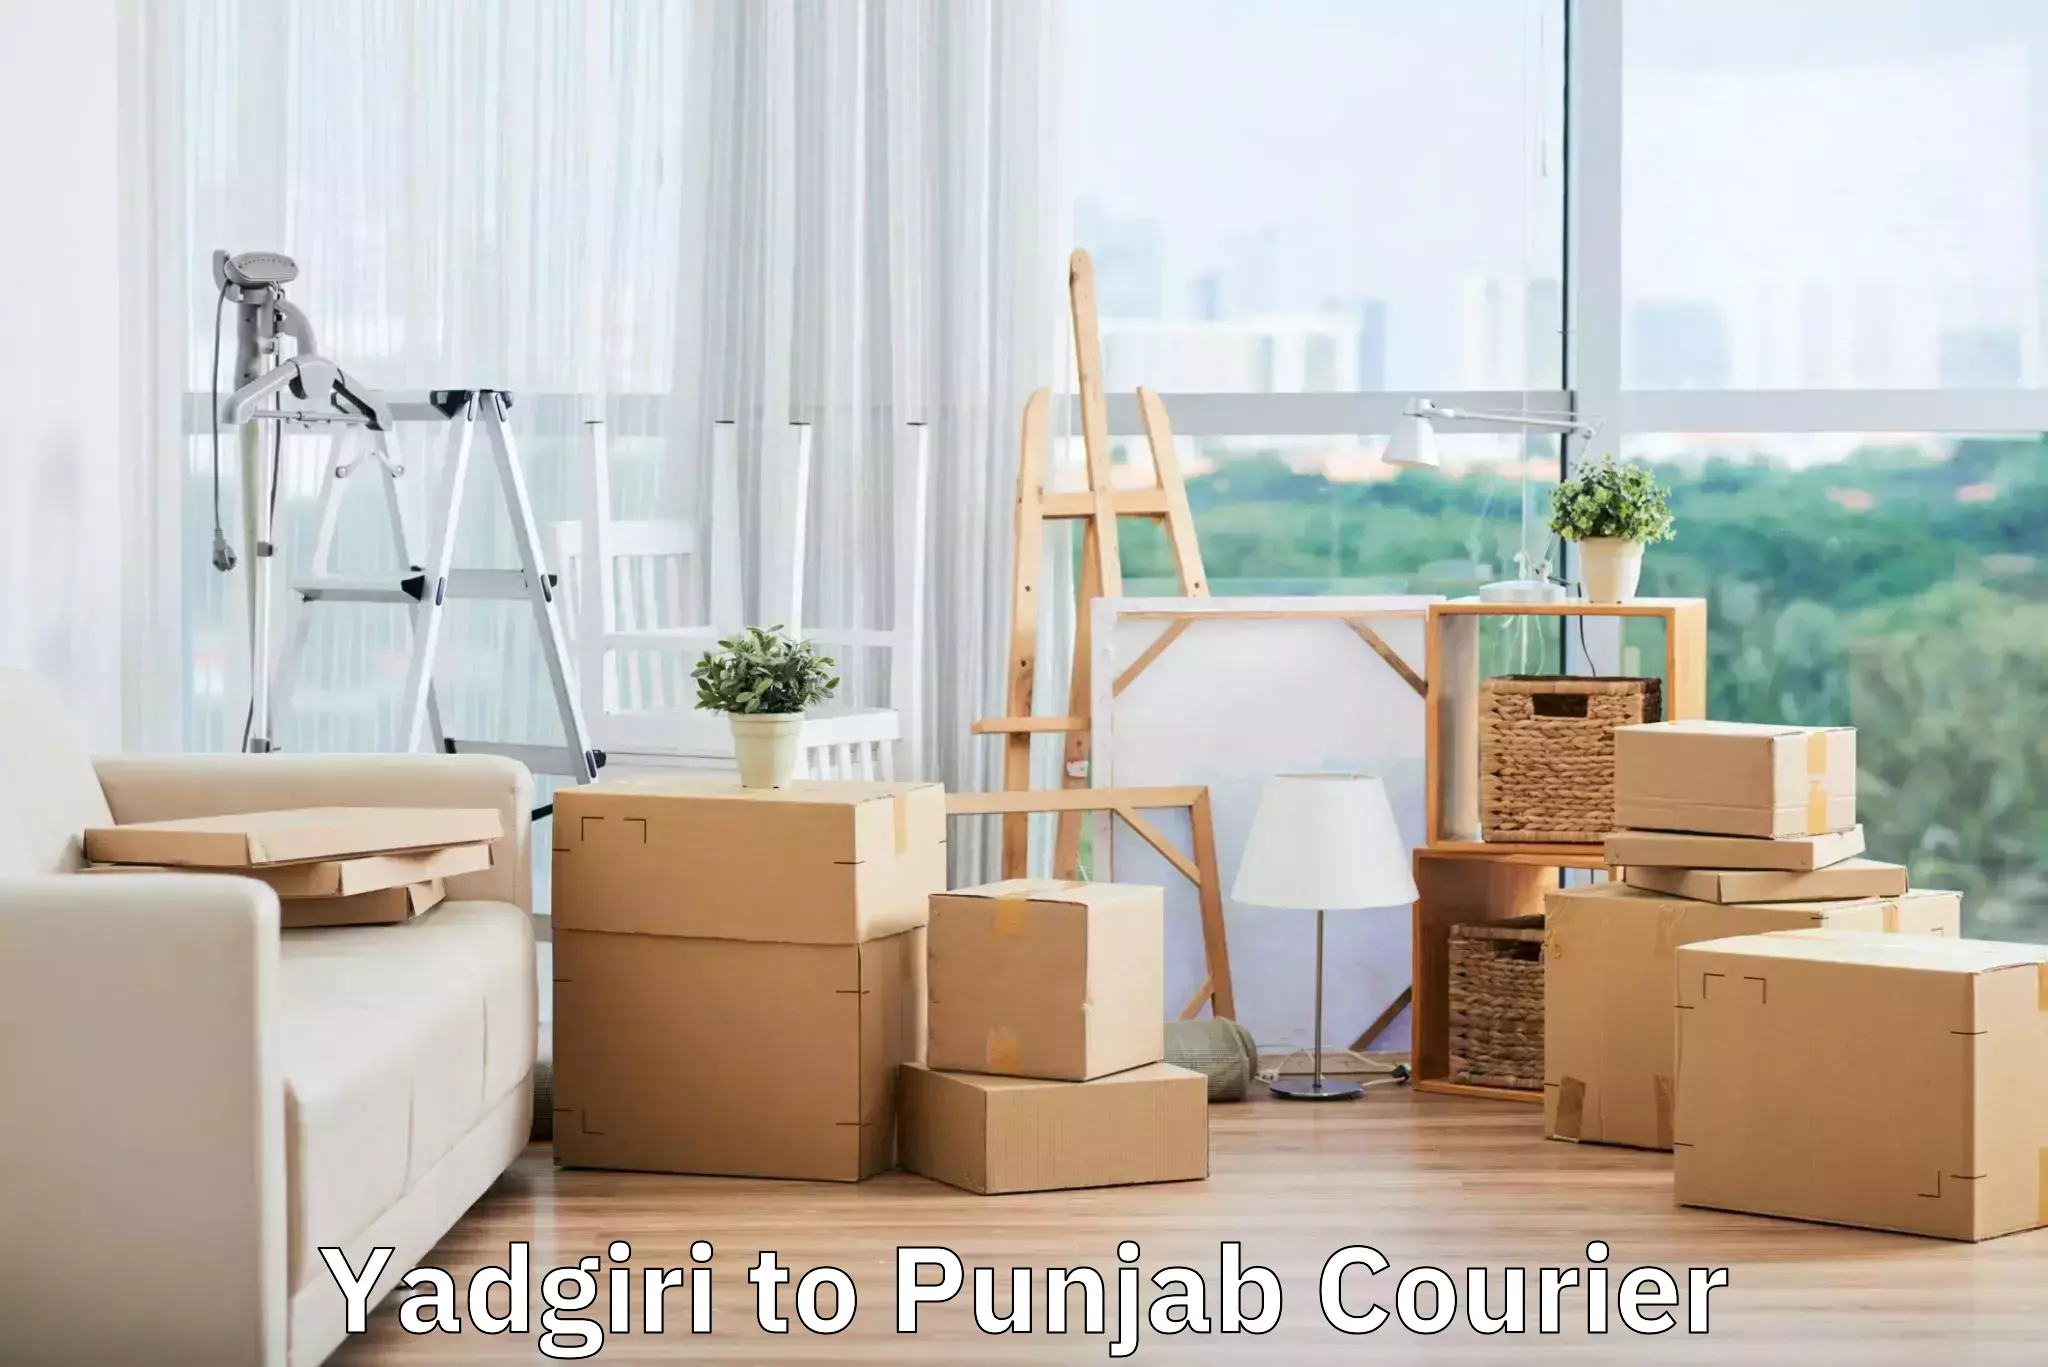 Luggage transport consultancy Yadgiri to Punjab